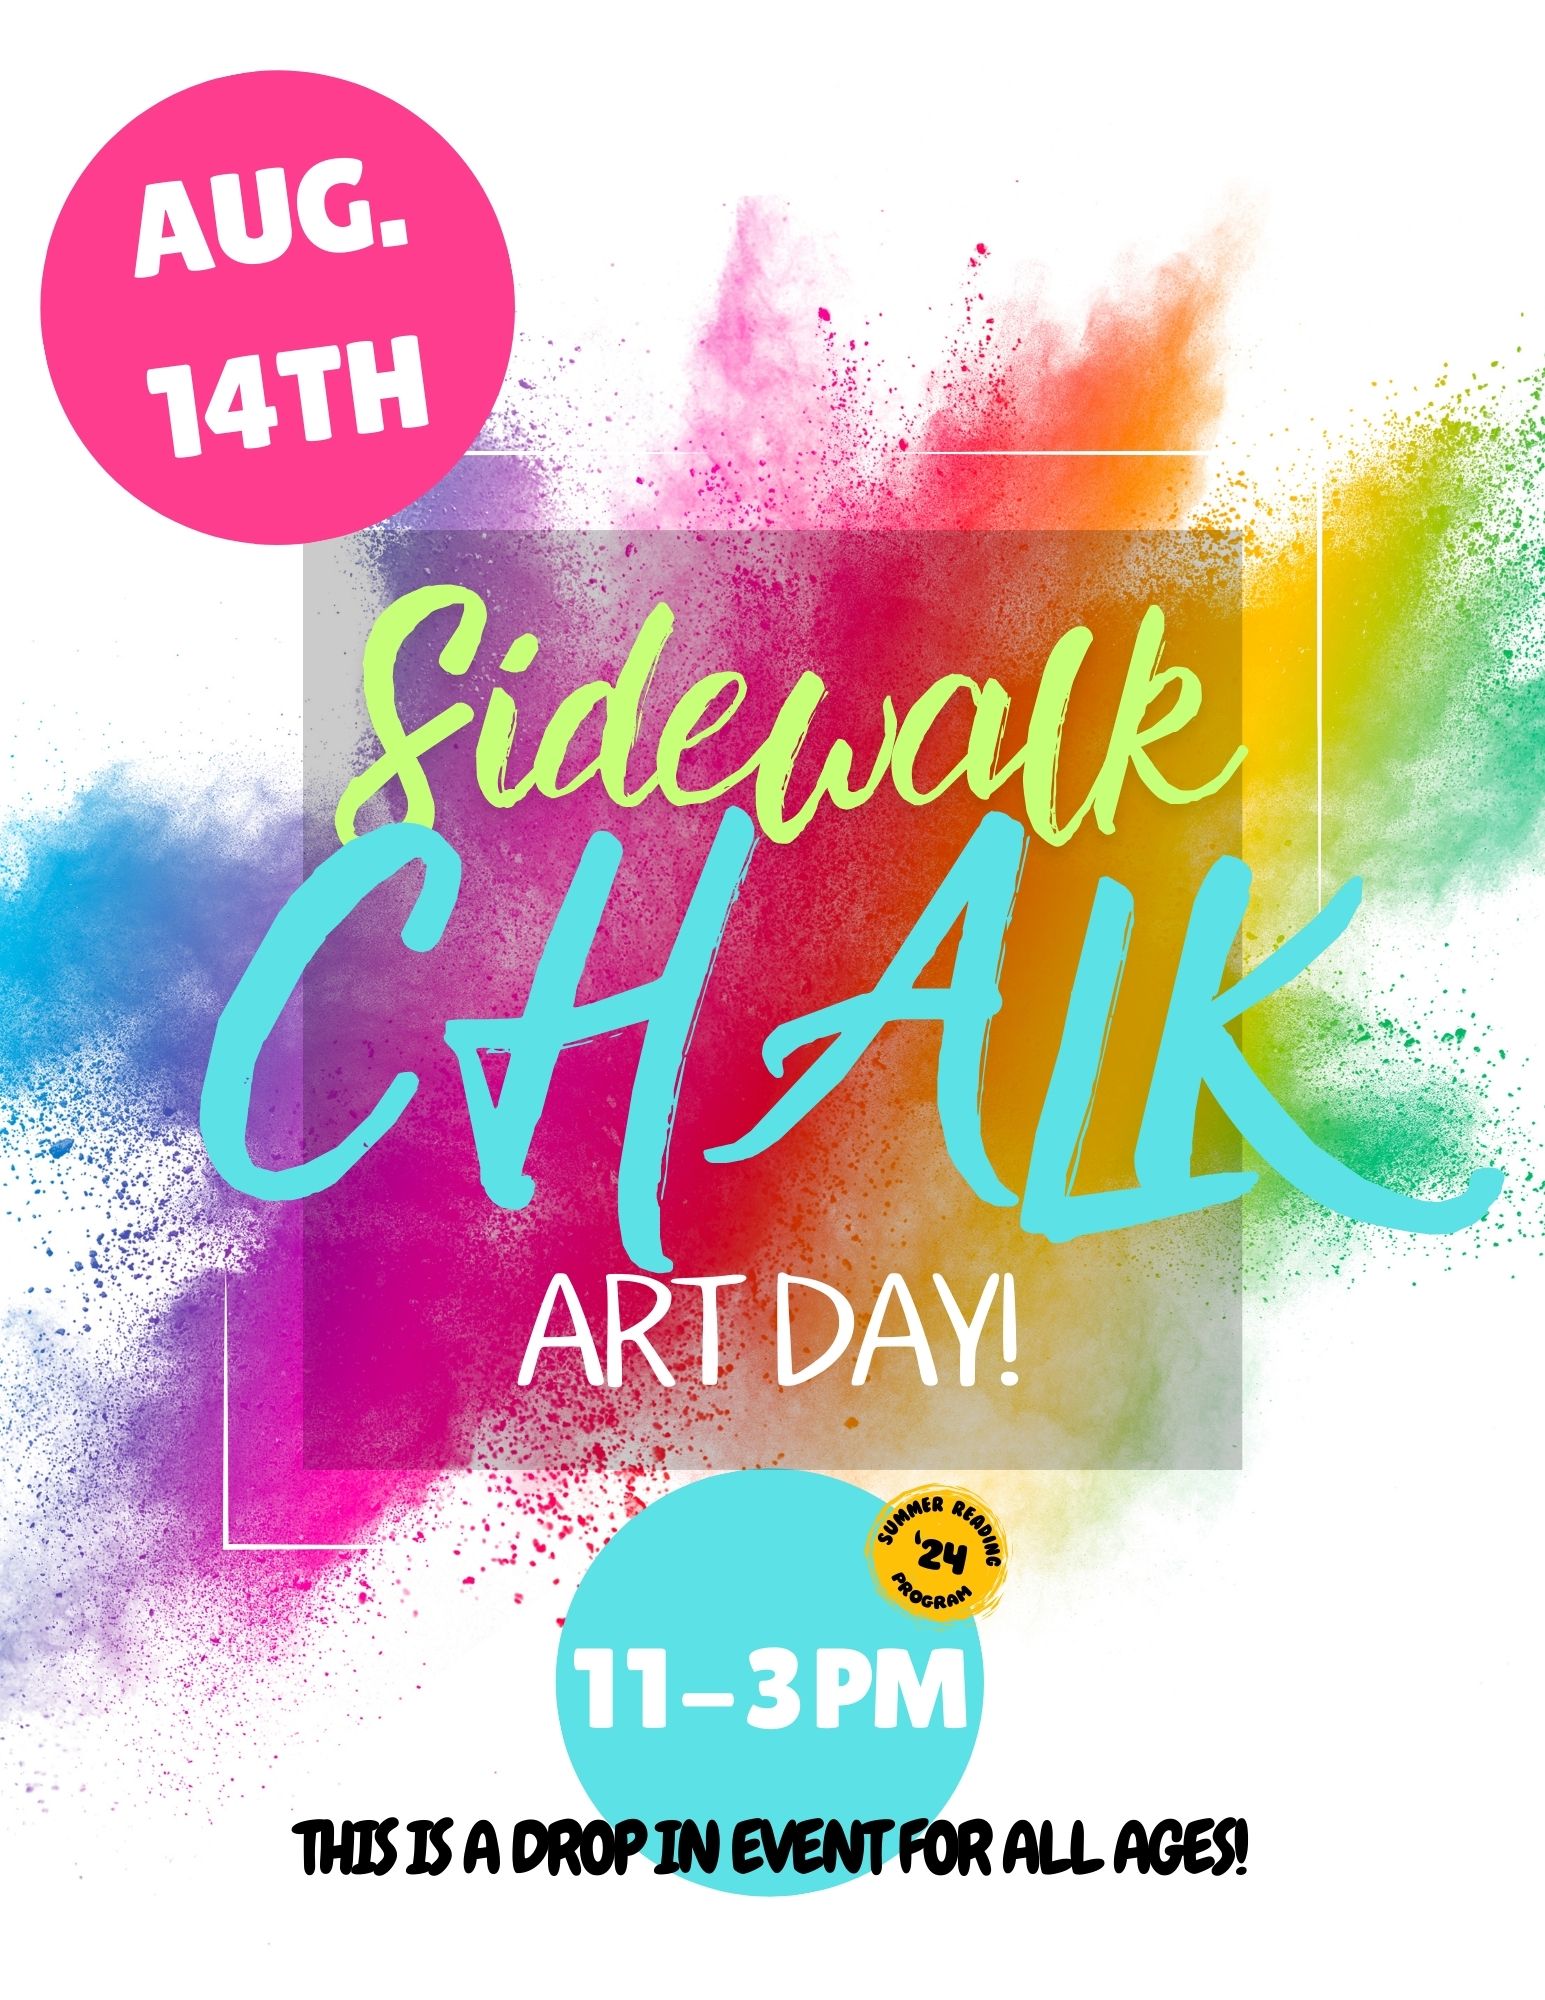 Sidewalk Chalk Art Day! August, 14th from 11-3 PM